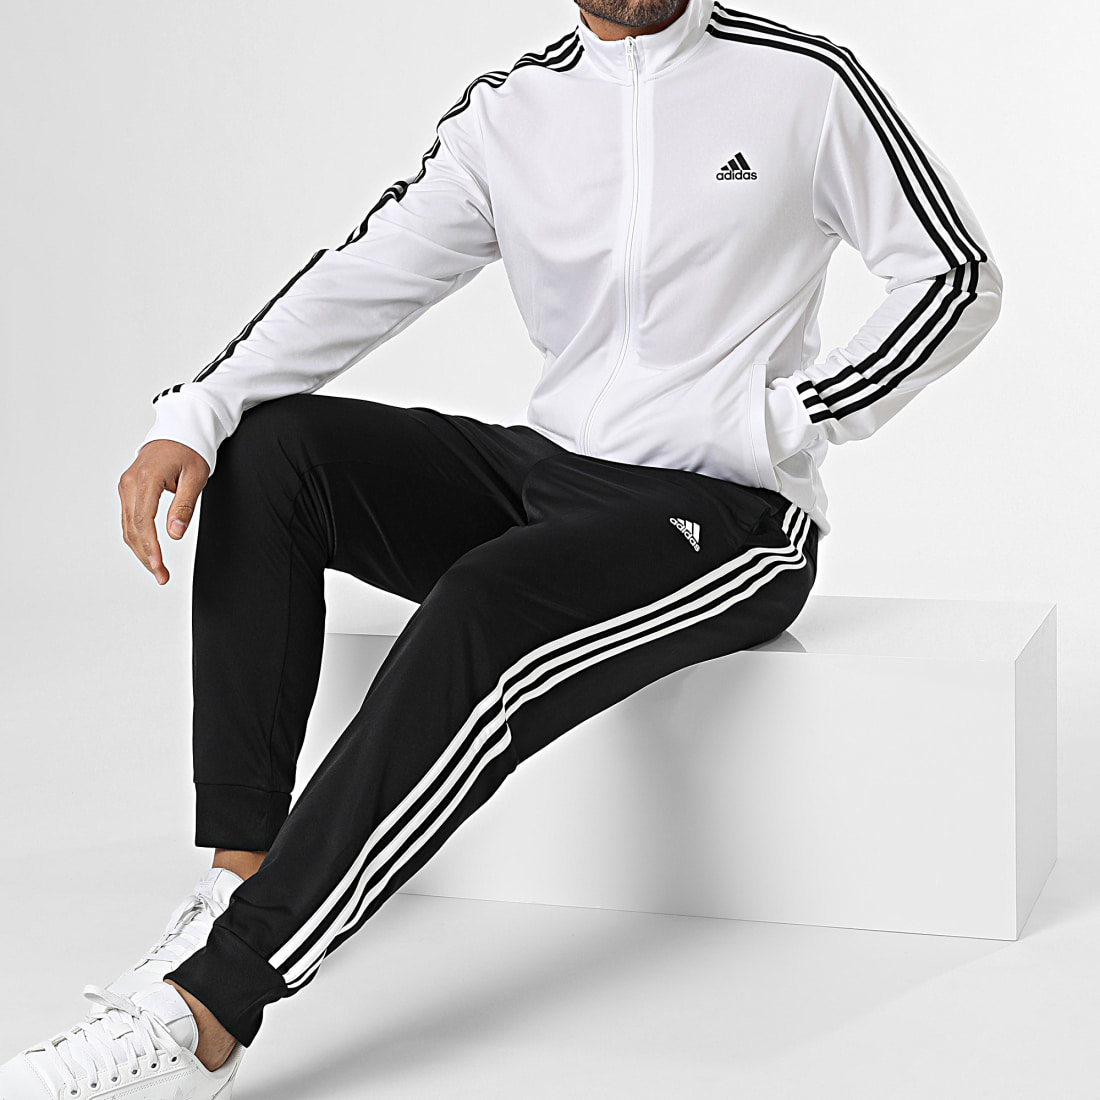 Ensemble de survêtement 3-stripes noir Adidas Sportswear